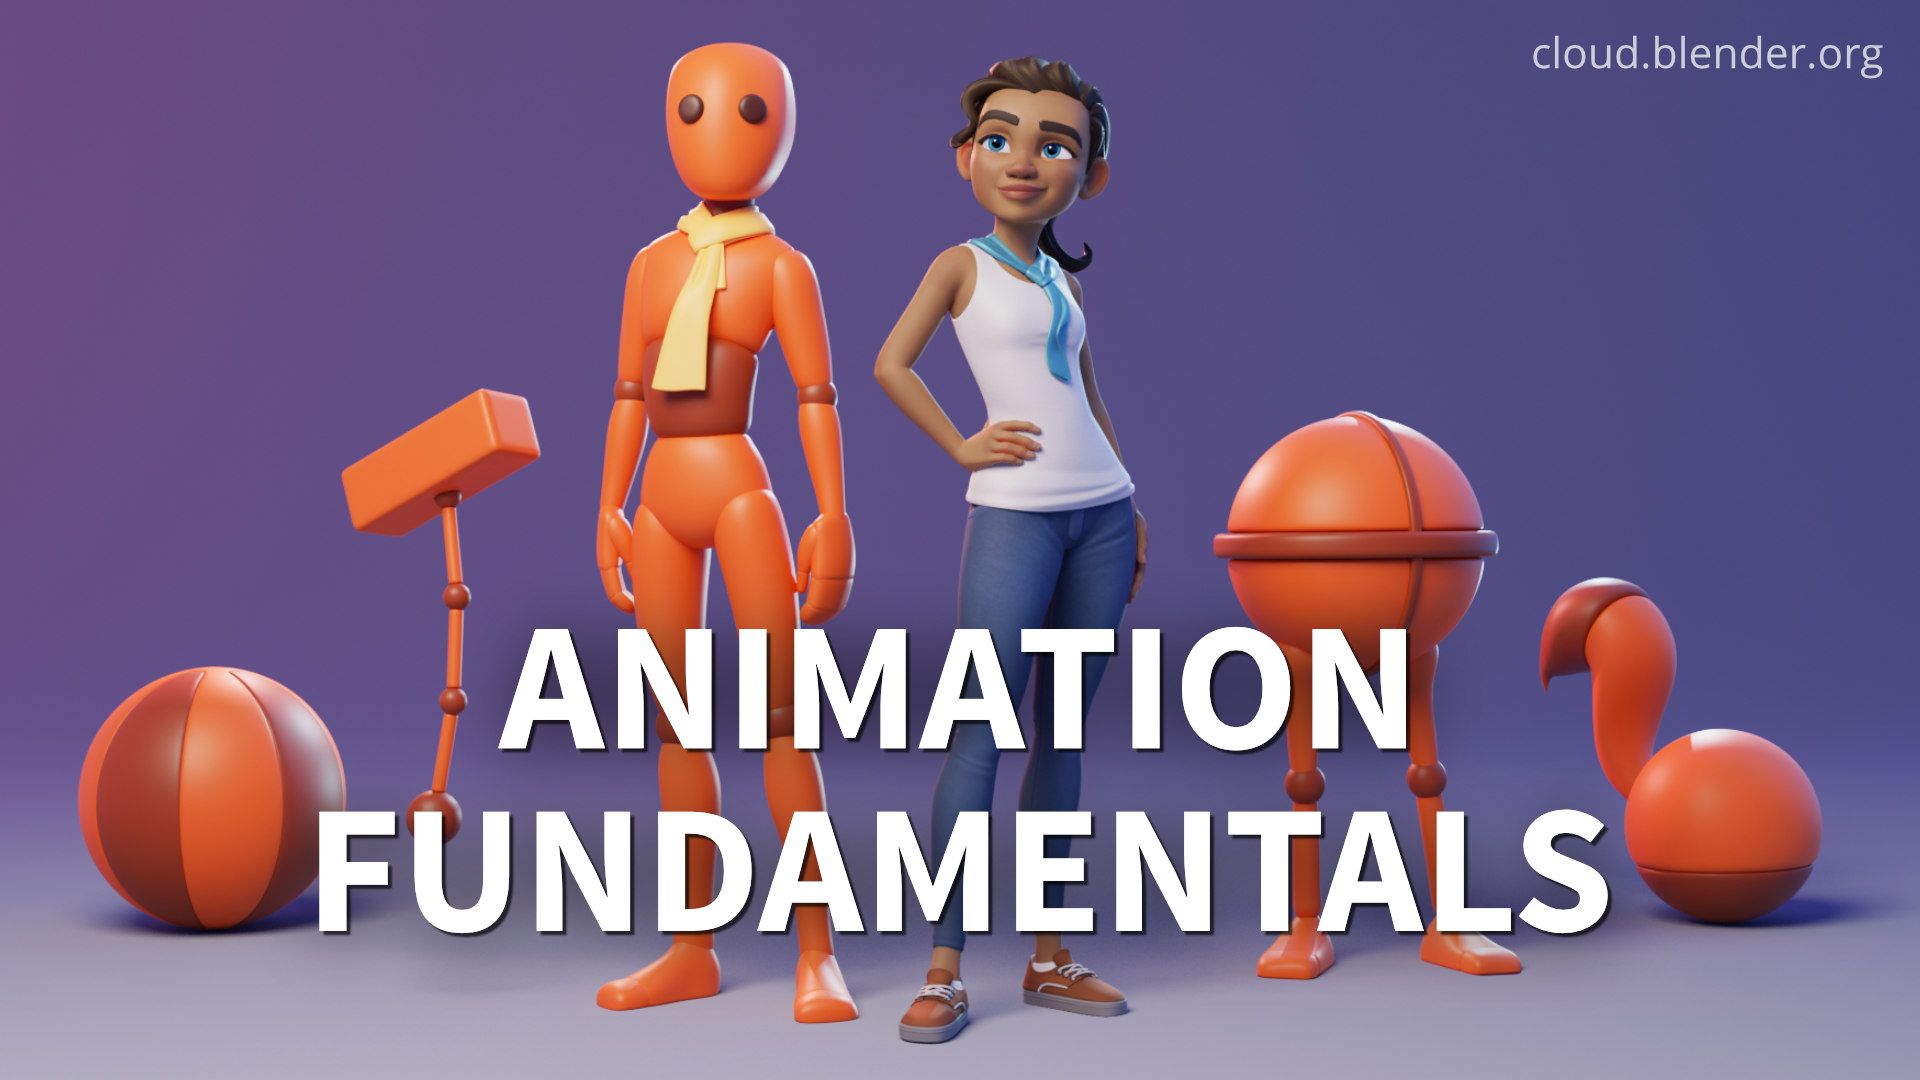 Derbeville test bitter forholdet Blender Studio on Twitter: "Blender Animation Fundamentals is the upcoming  training focused on character animation with Blender 2.8: coming soon on  Blender Cloud! Read more on https://t.co/EbLZe2u4sC #b3d  https://t.co/IkLyMjkYpn" / Twitter